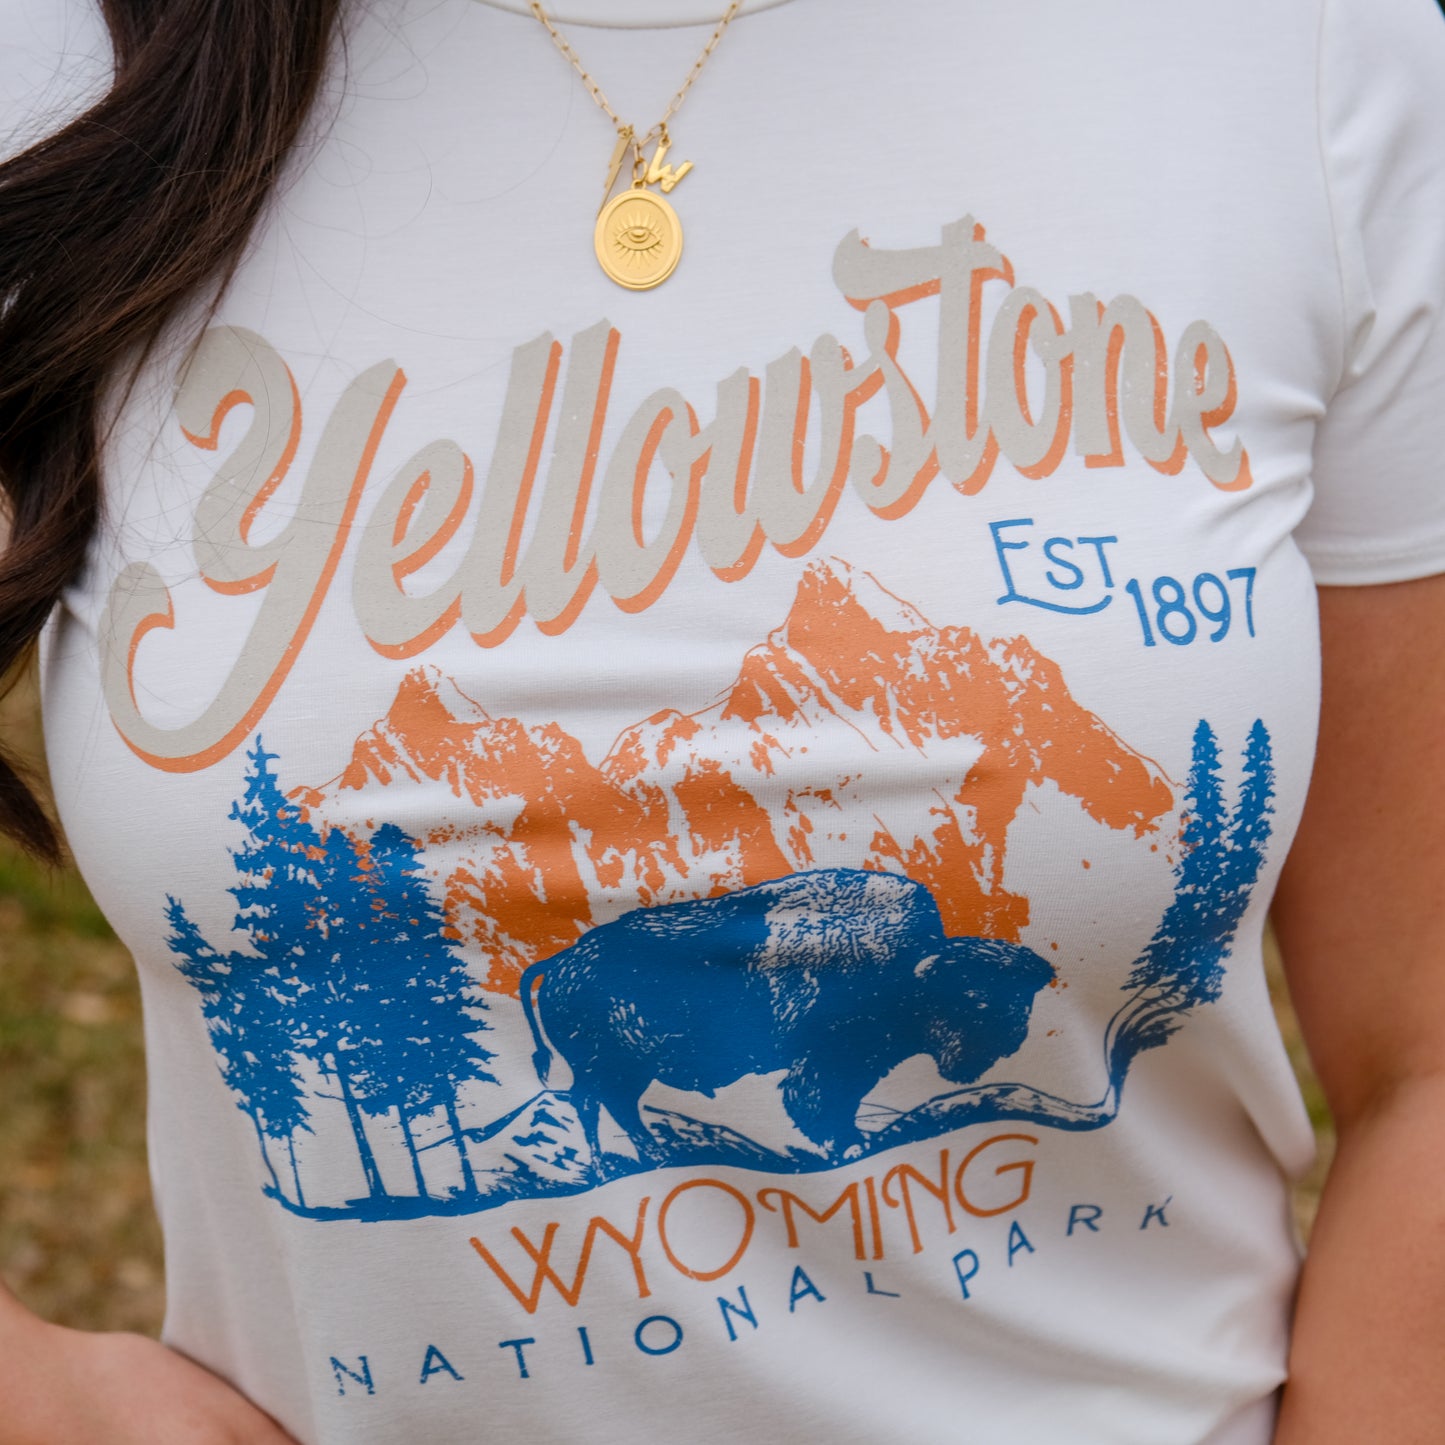 Yellowstone National Park Graphic Tee